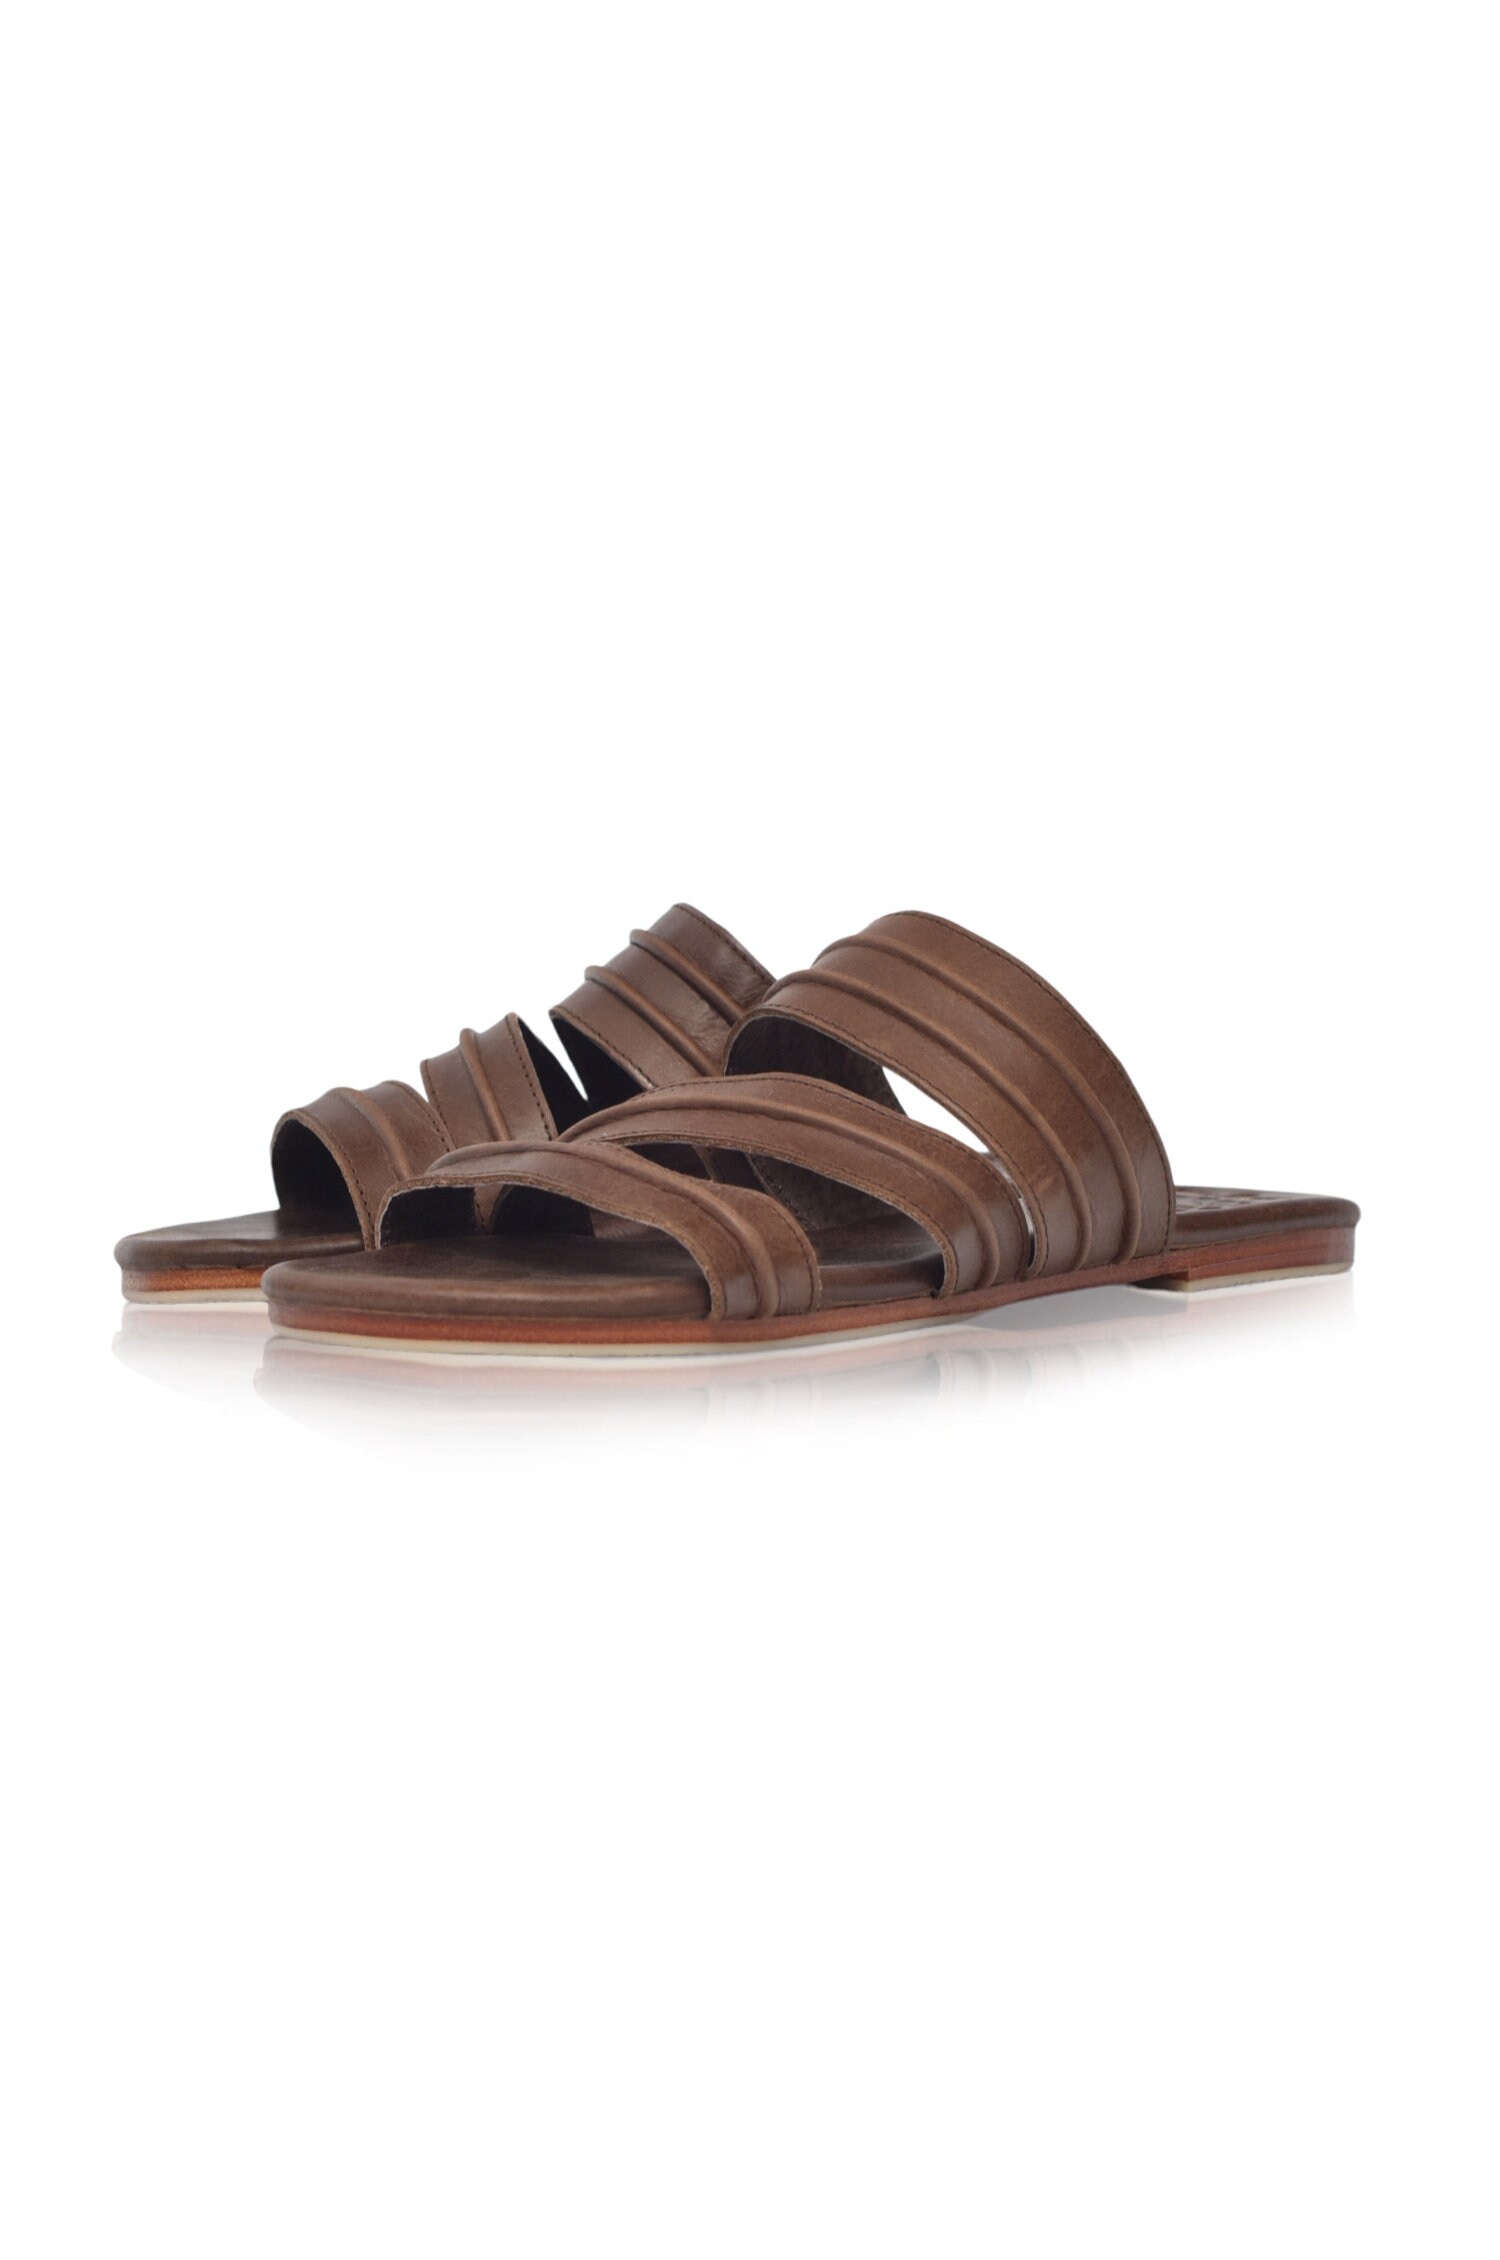 MIRAGE. Leather flat sandals boho leather sandals barefoot | Etsy